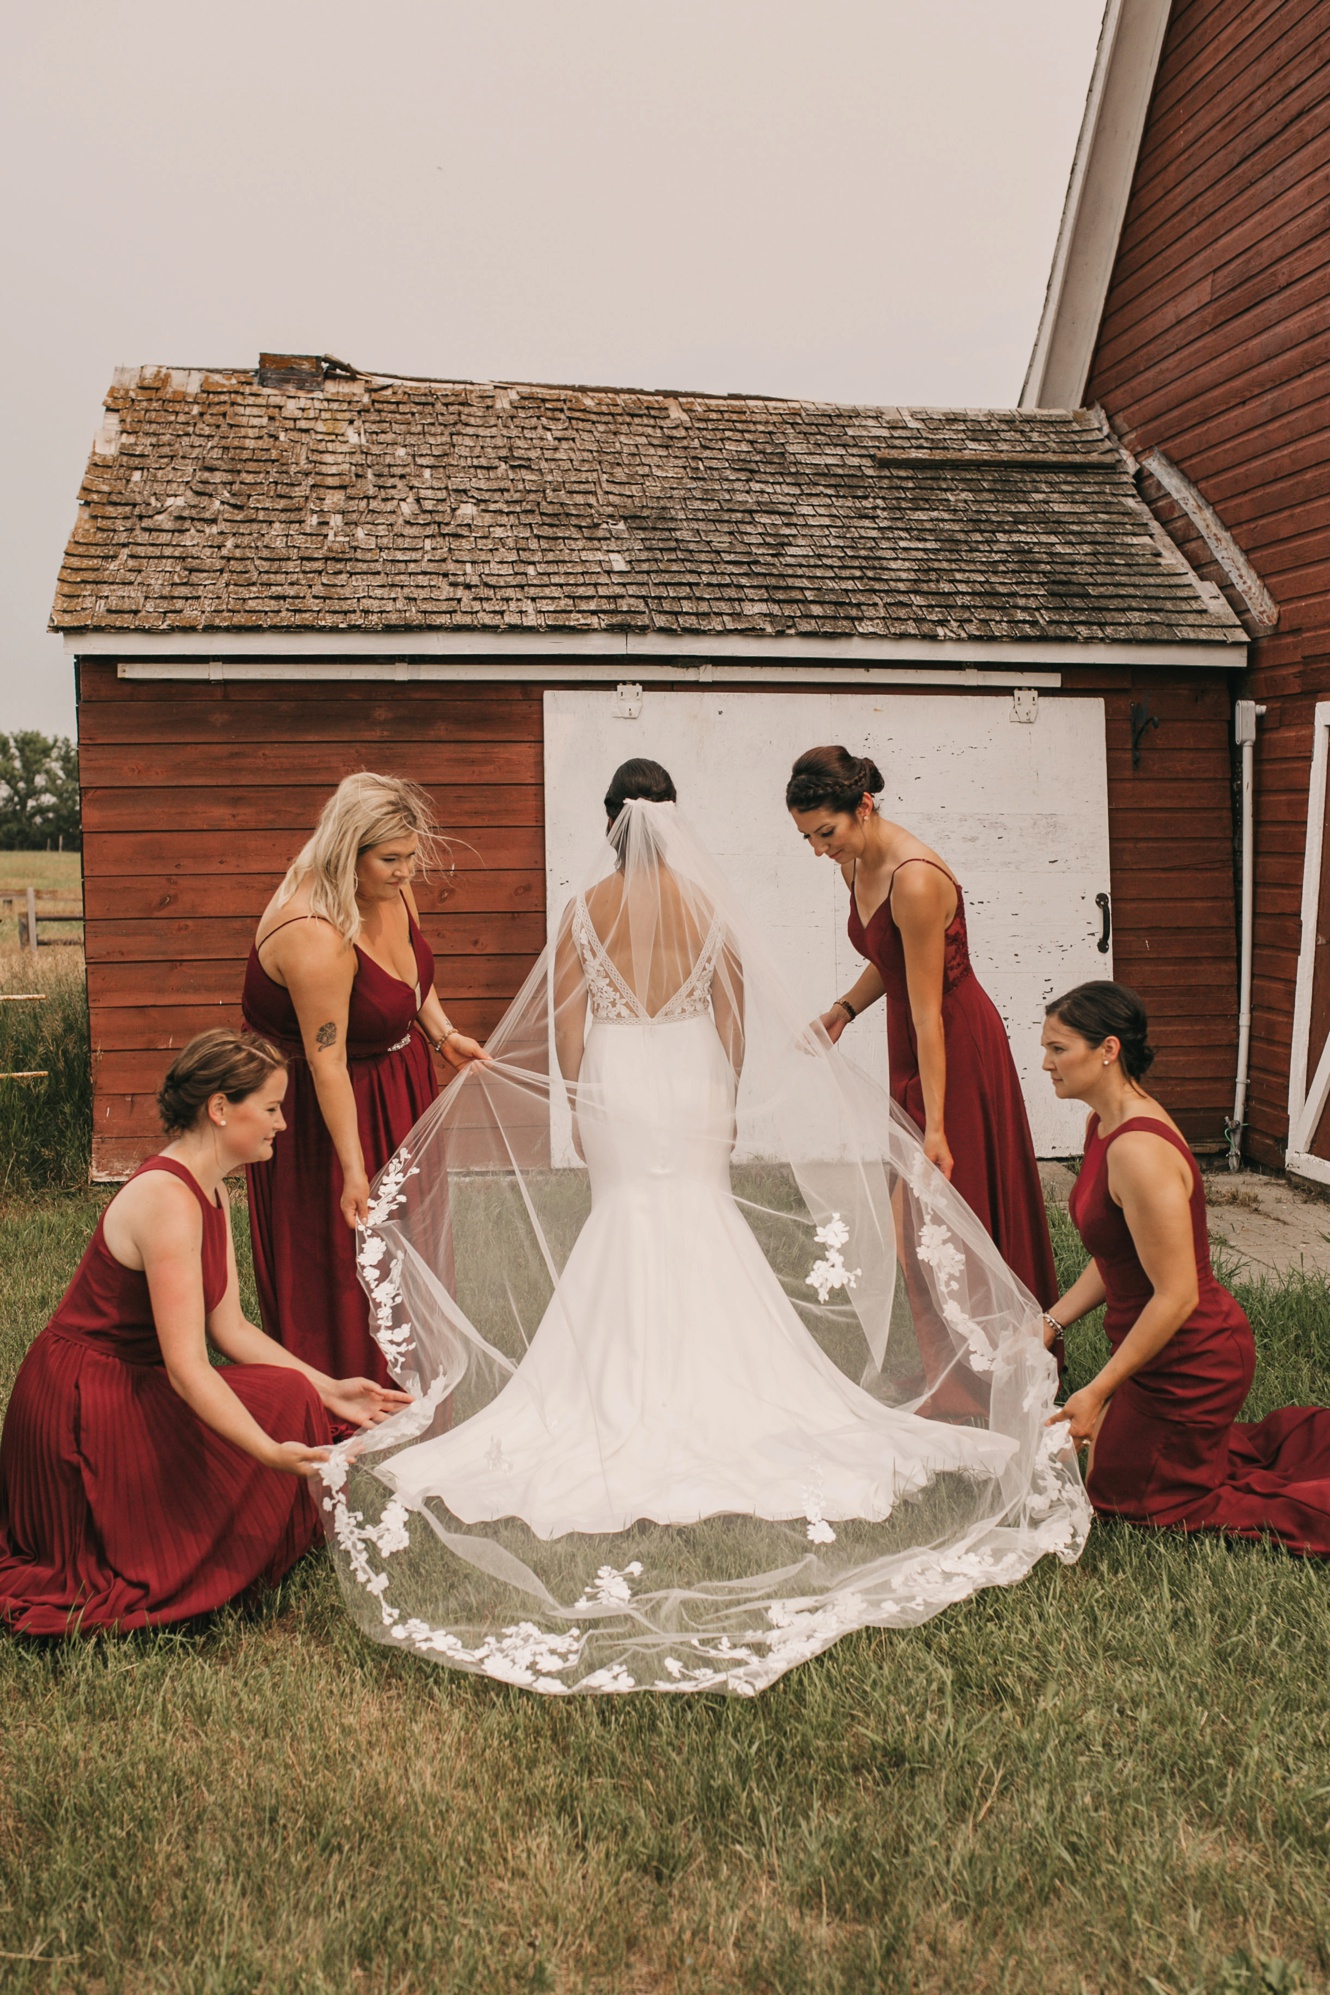 Photo of bridesmaids fixing brides veil